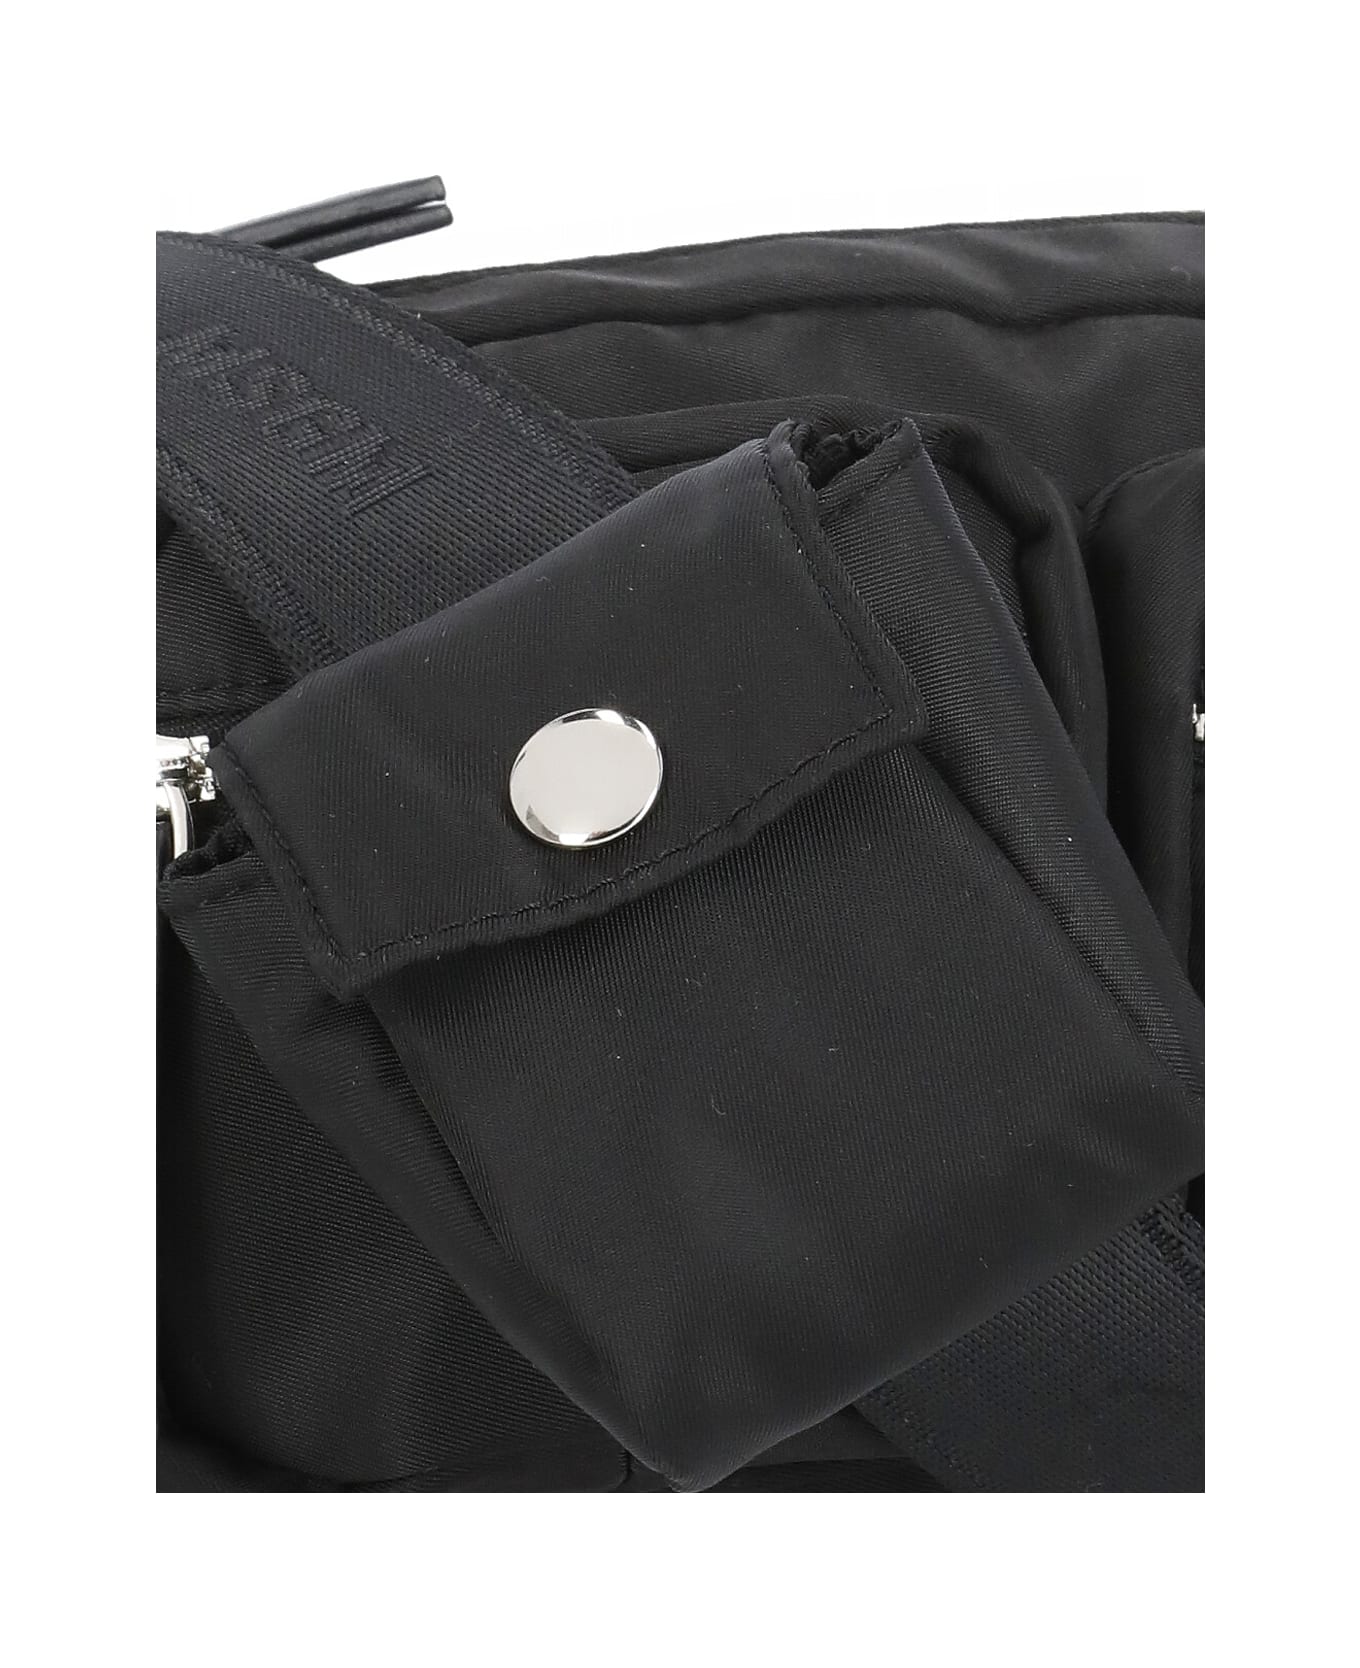 MSGM Nylon Camera Bag - Black ショルダーバッグ